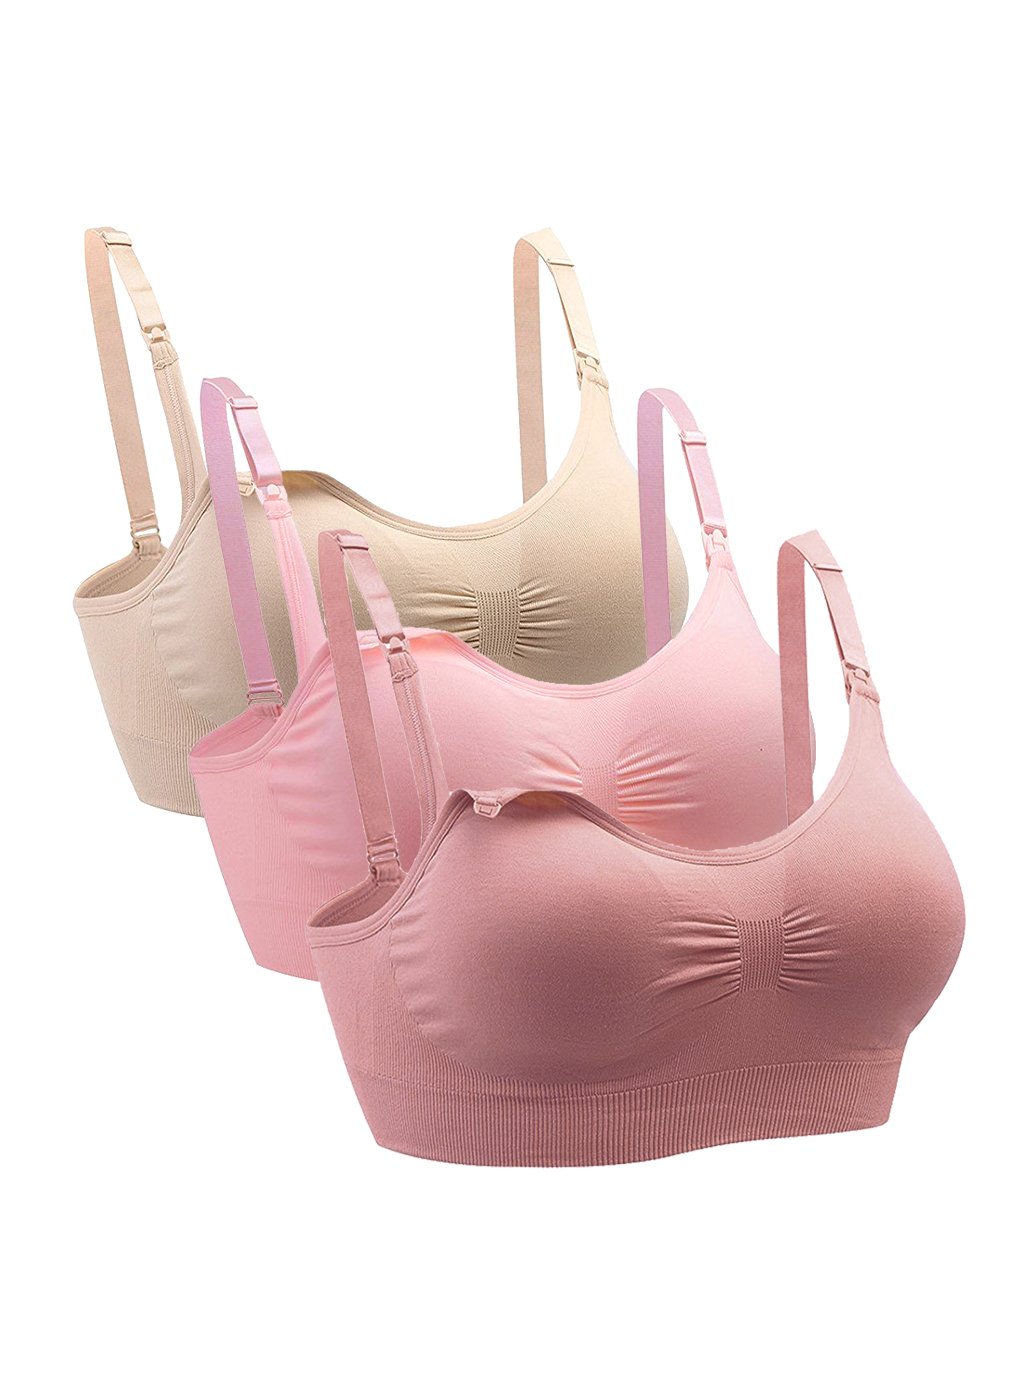 Lovemere seamless nursing bra (nude colour, size M), Babies & Kids